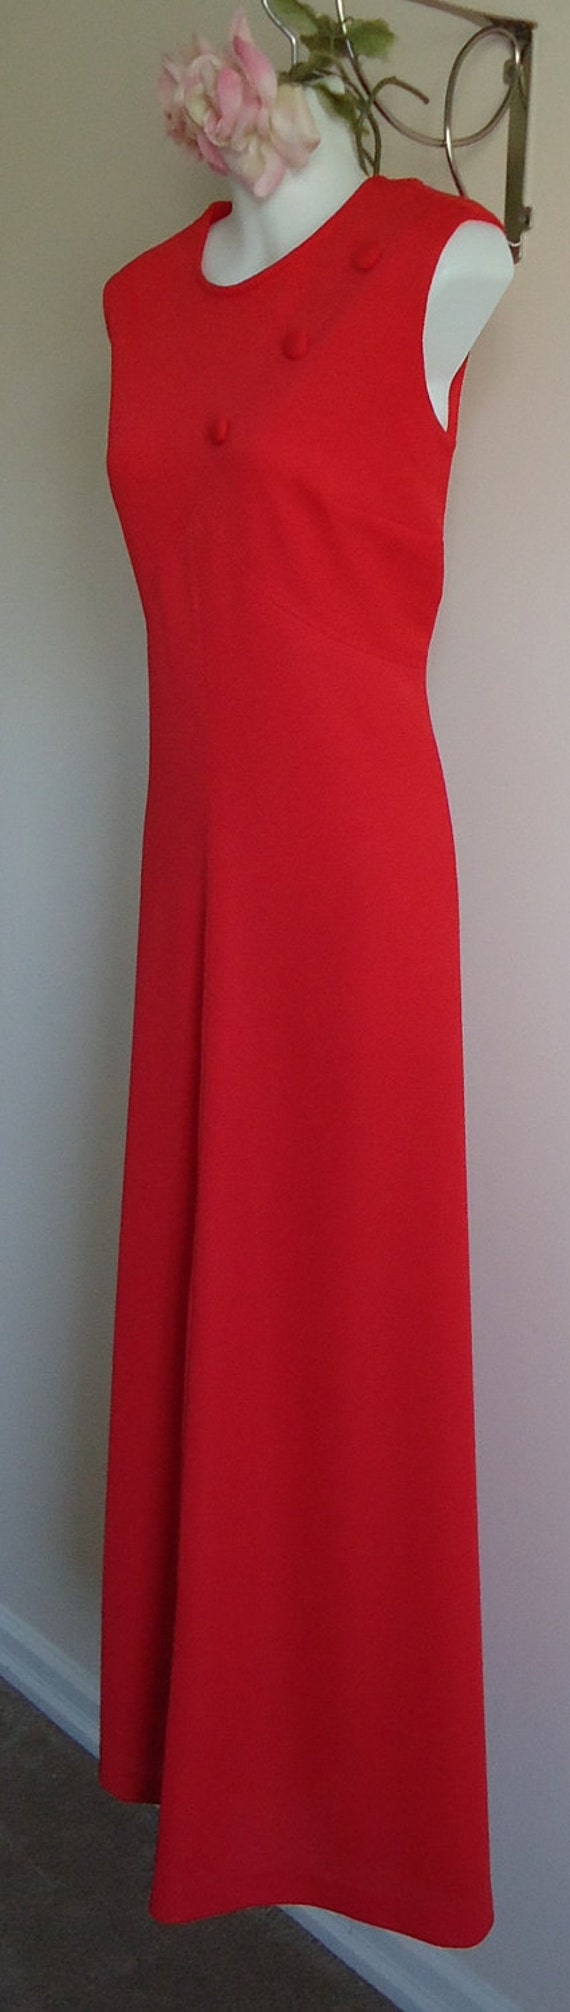 Vintage 1970s Red Sleeveless Summer Evening Dress